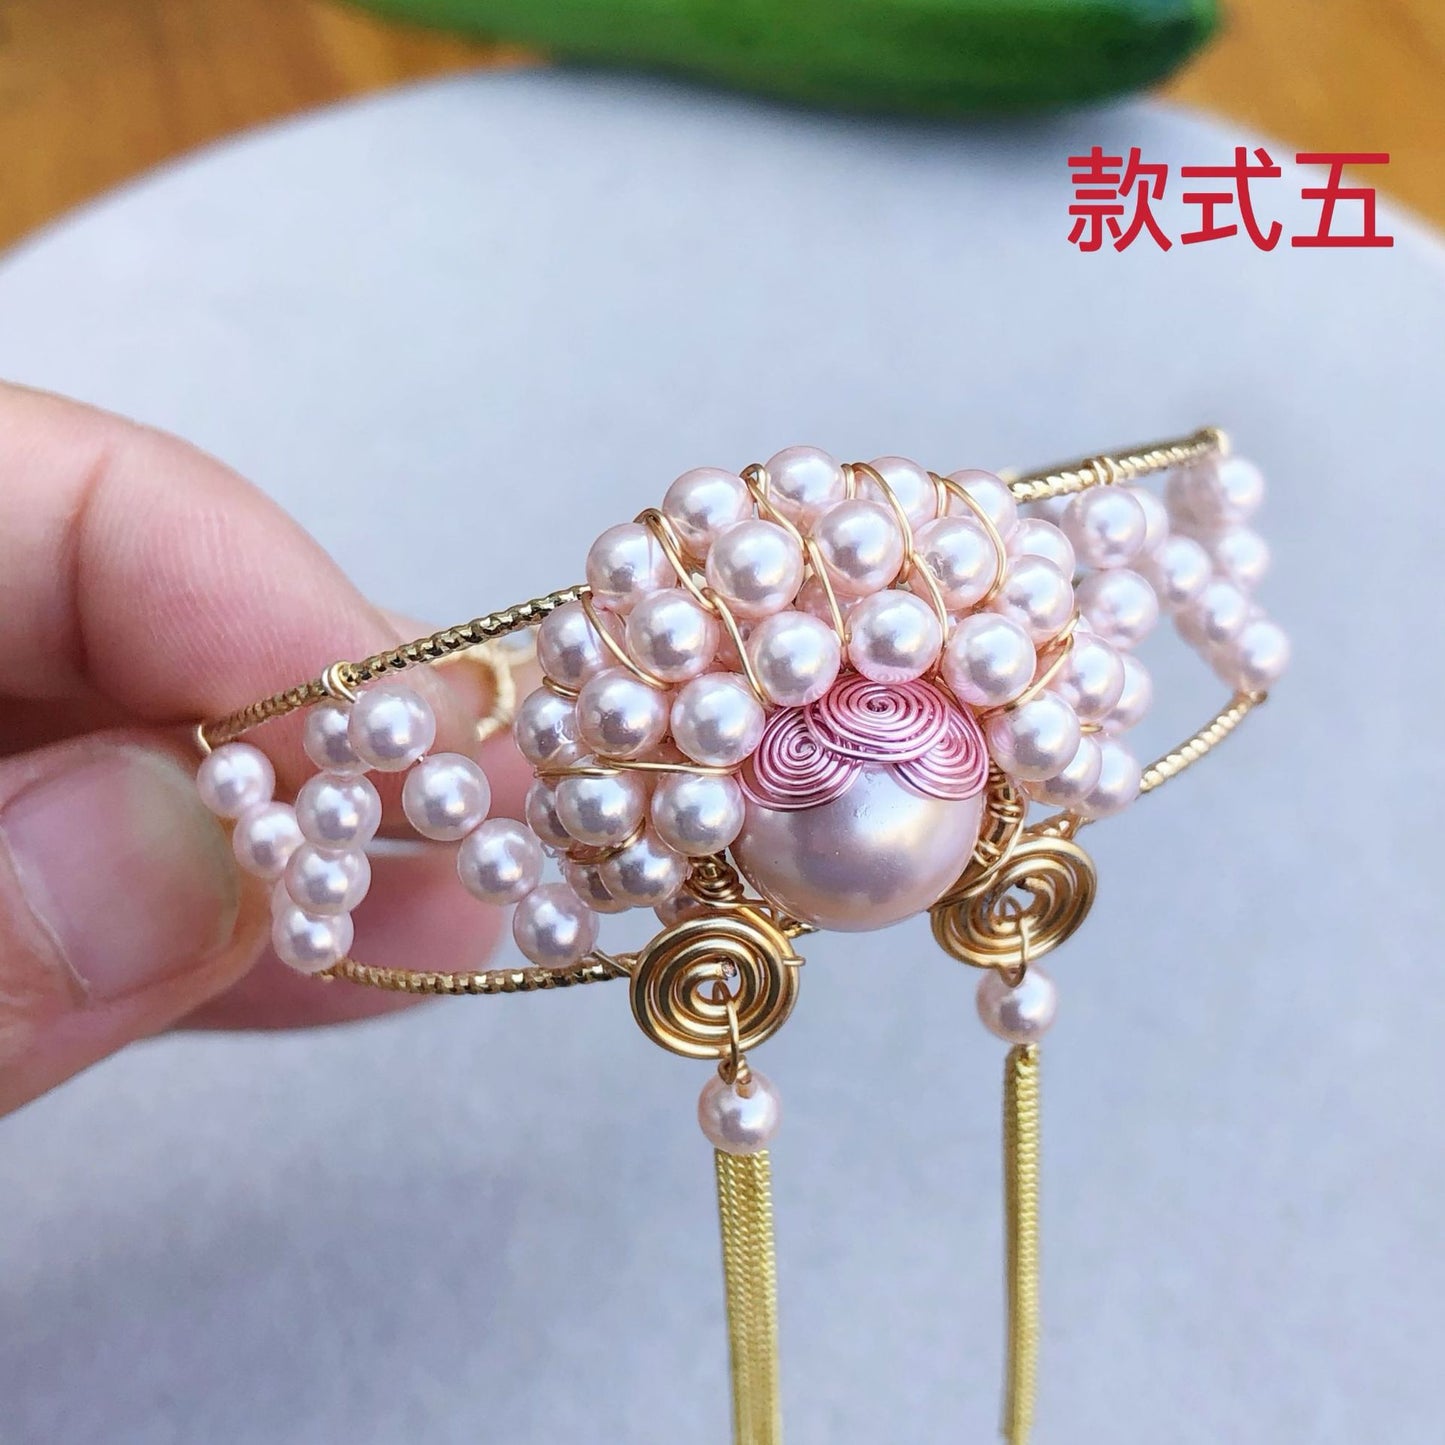 Handmade Chinese style culture bracelet design Peking Opera custom personalized birthday gift accessories